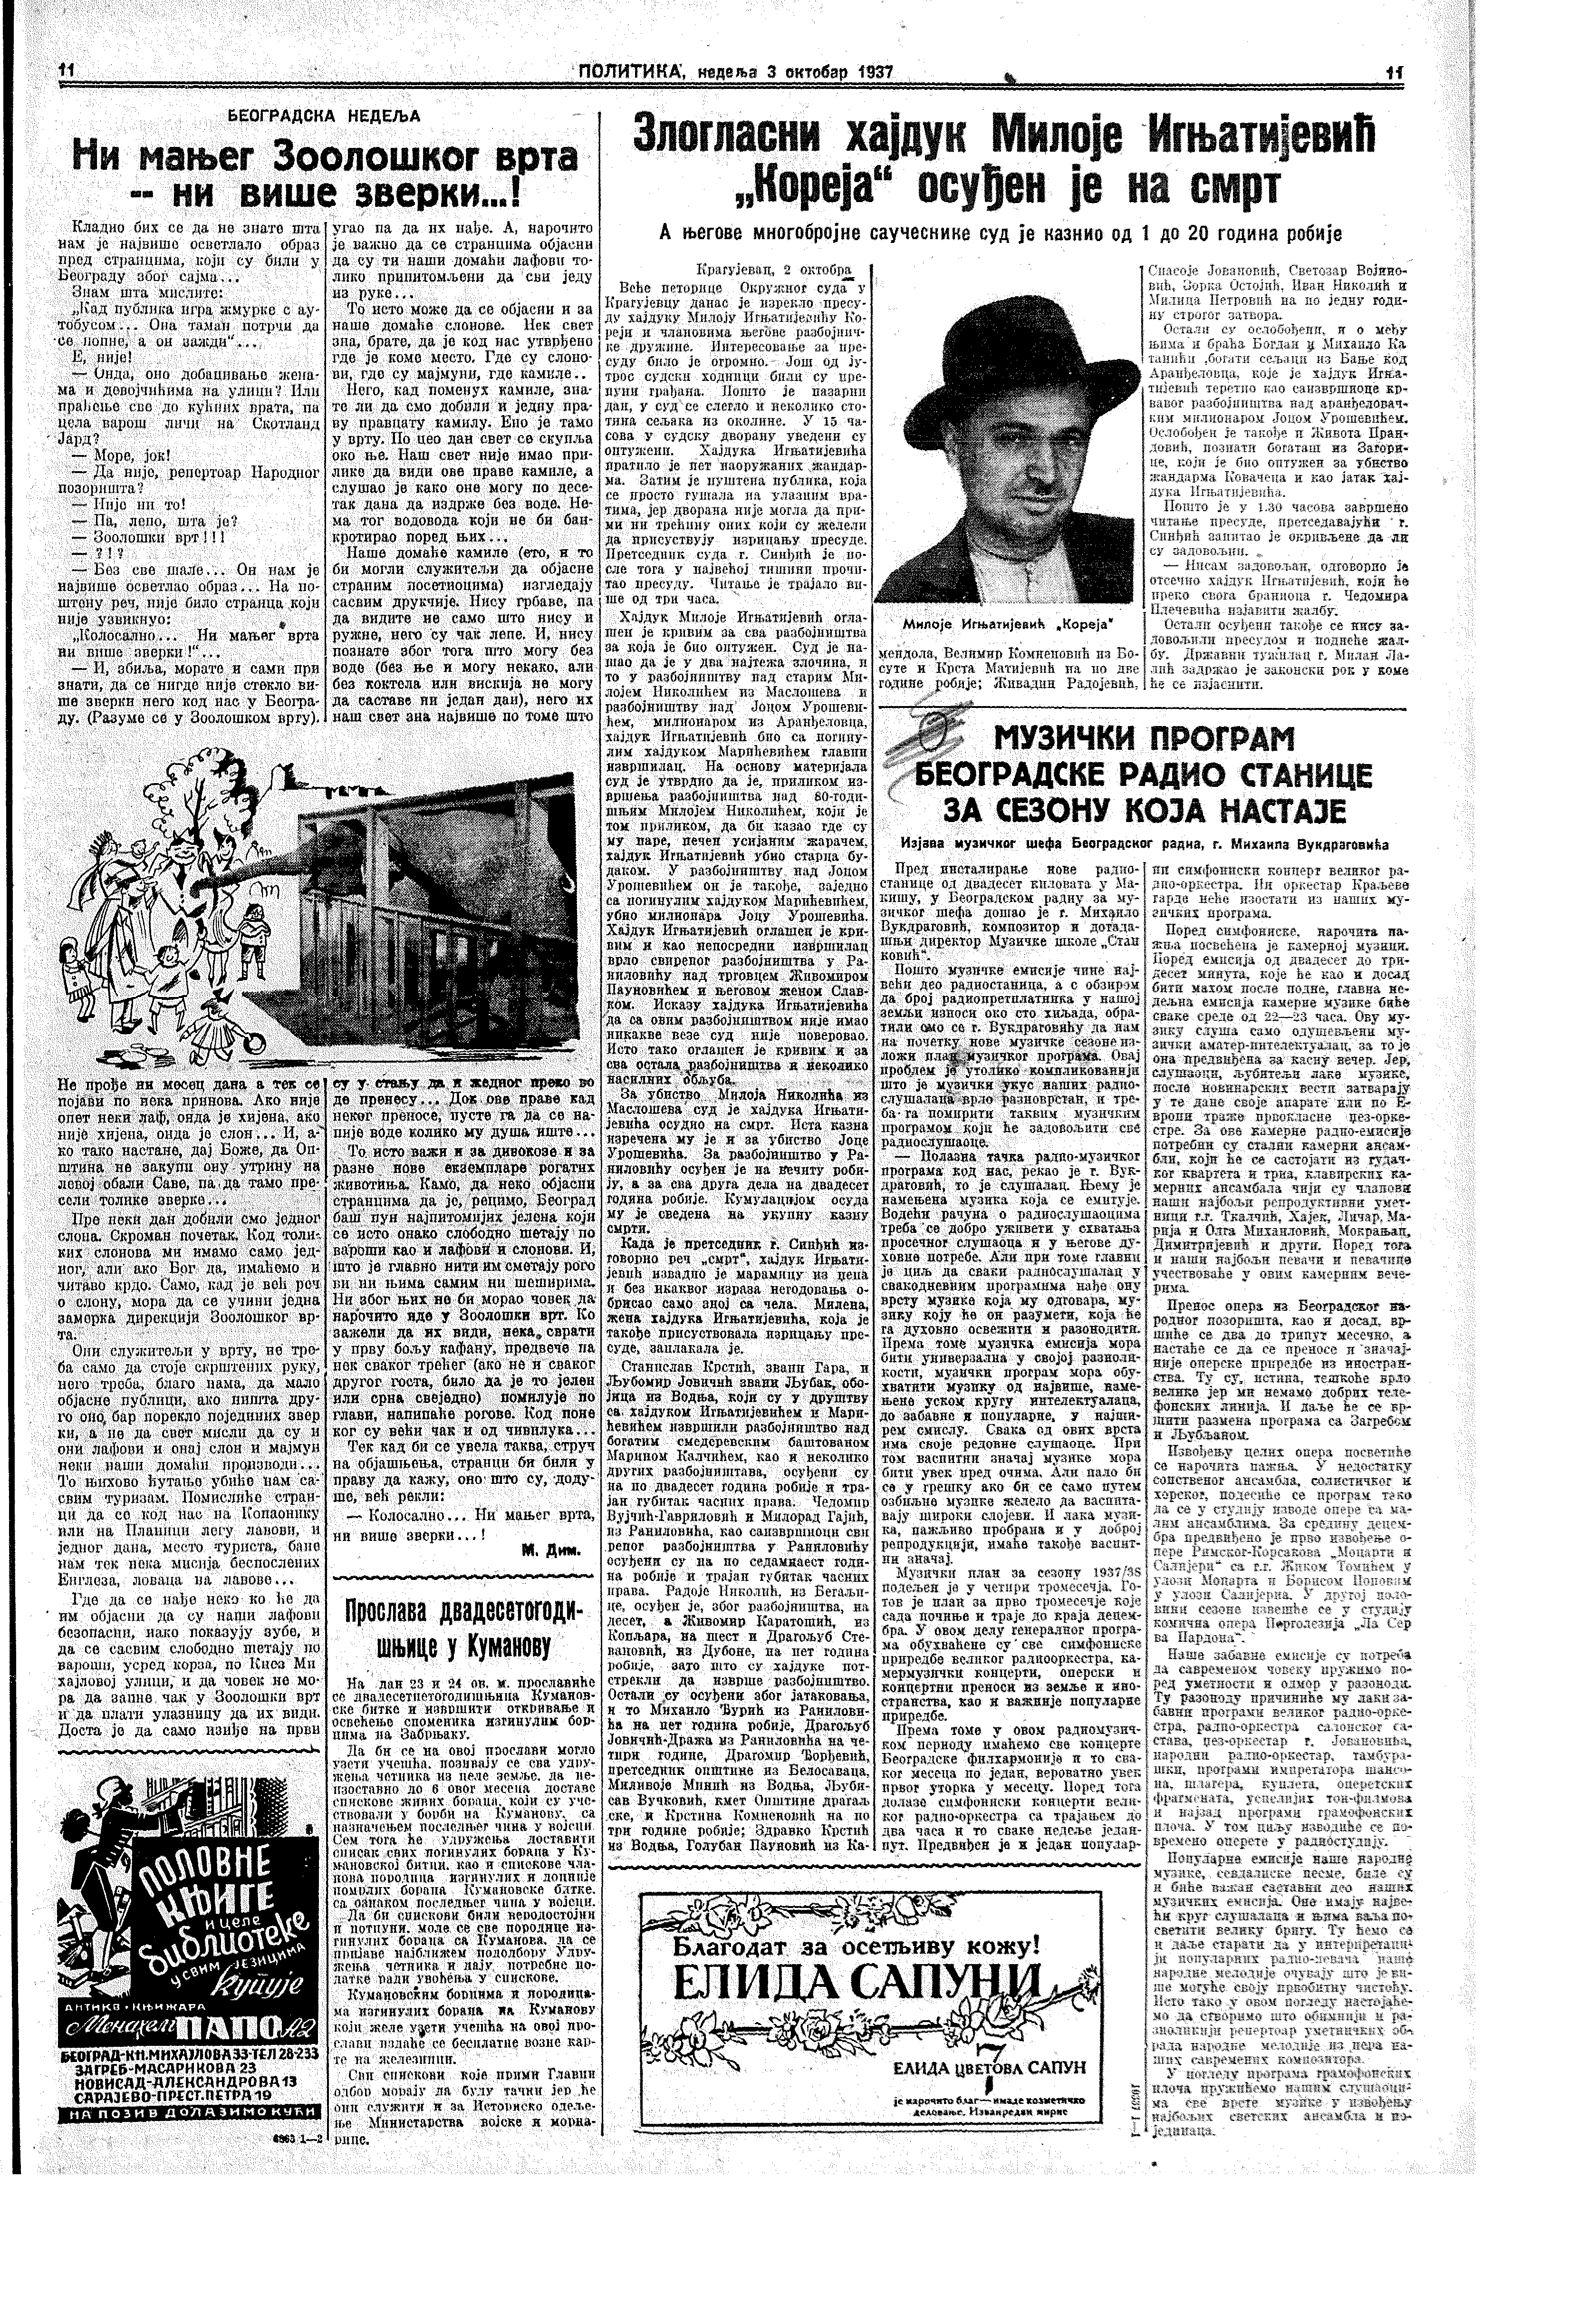 Zloglasni Koreja osuđen na smrt, Politika, 03.10.1937.